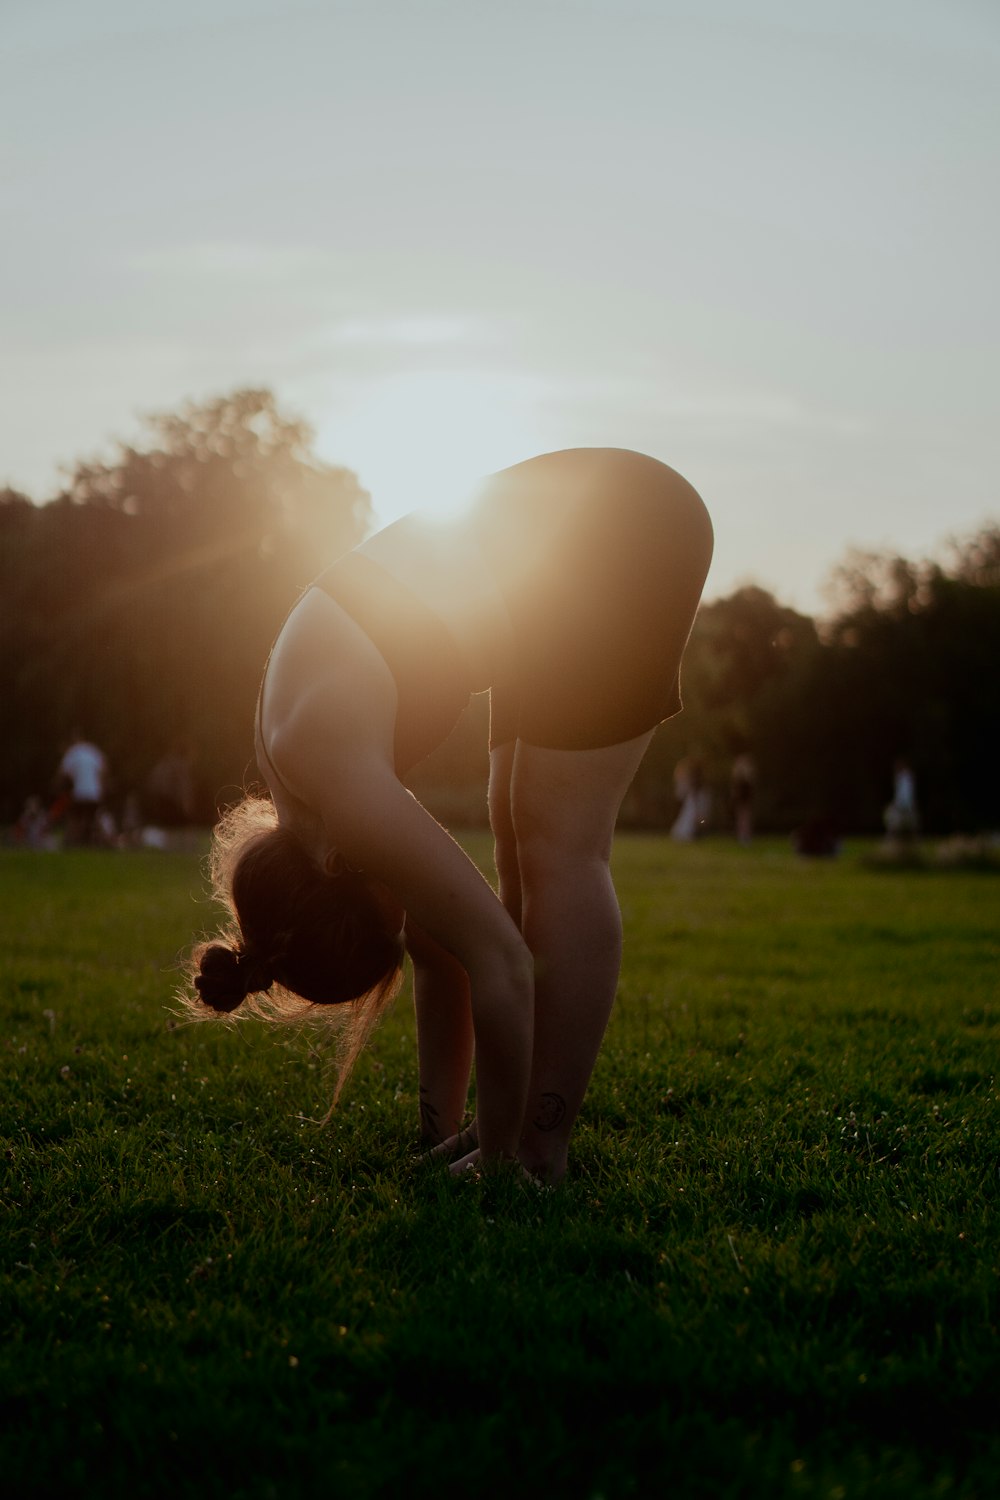 woman in white bikini bottom kneeling on green grass field during sunset